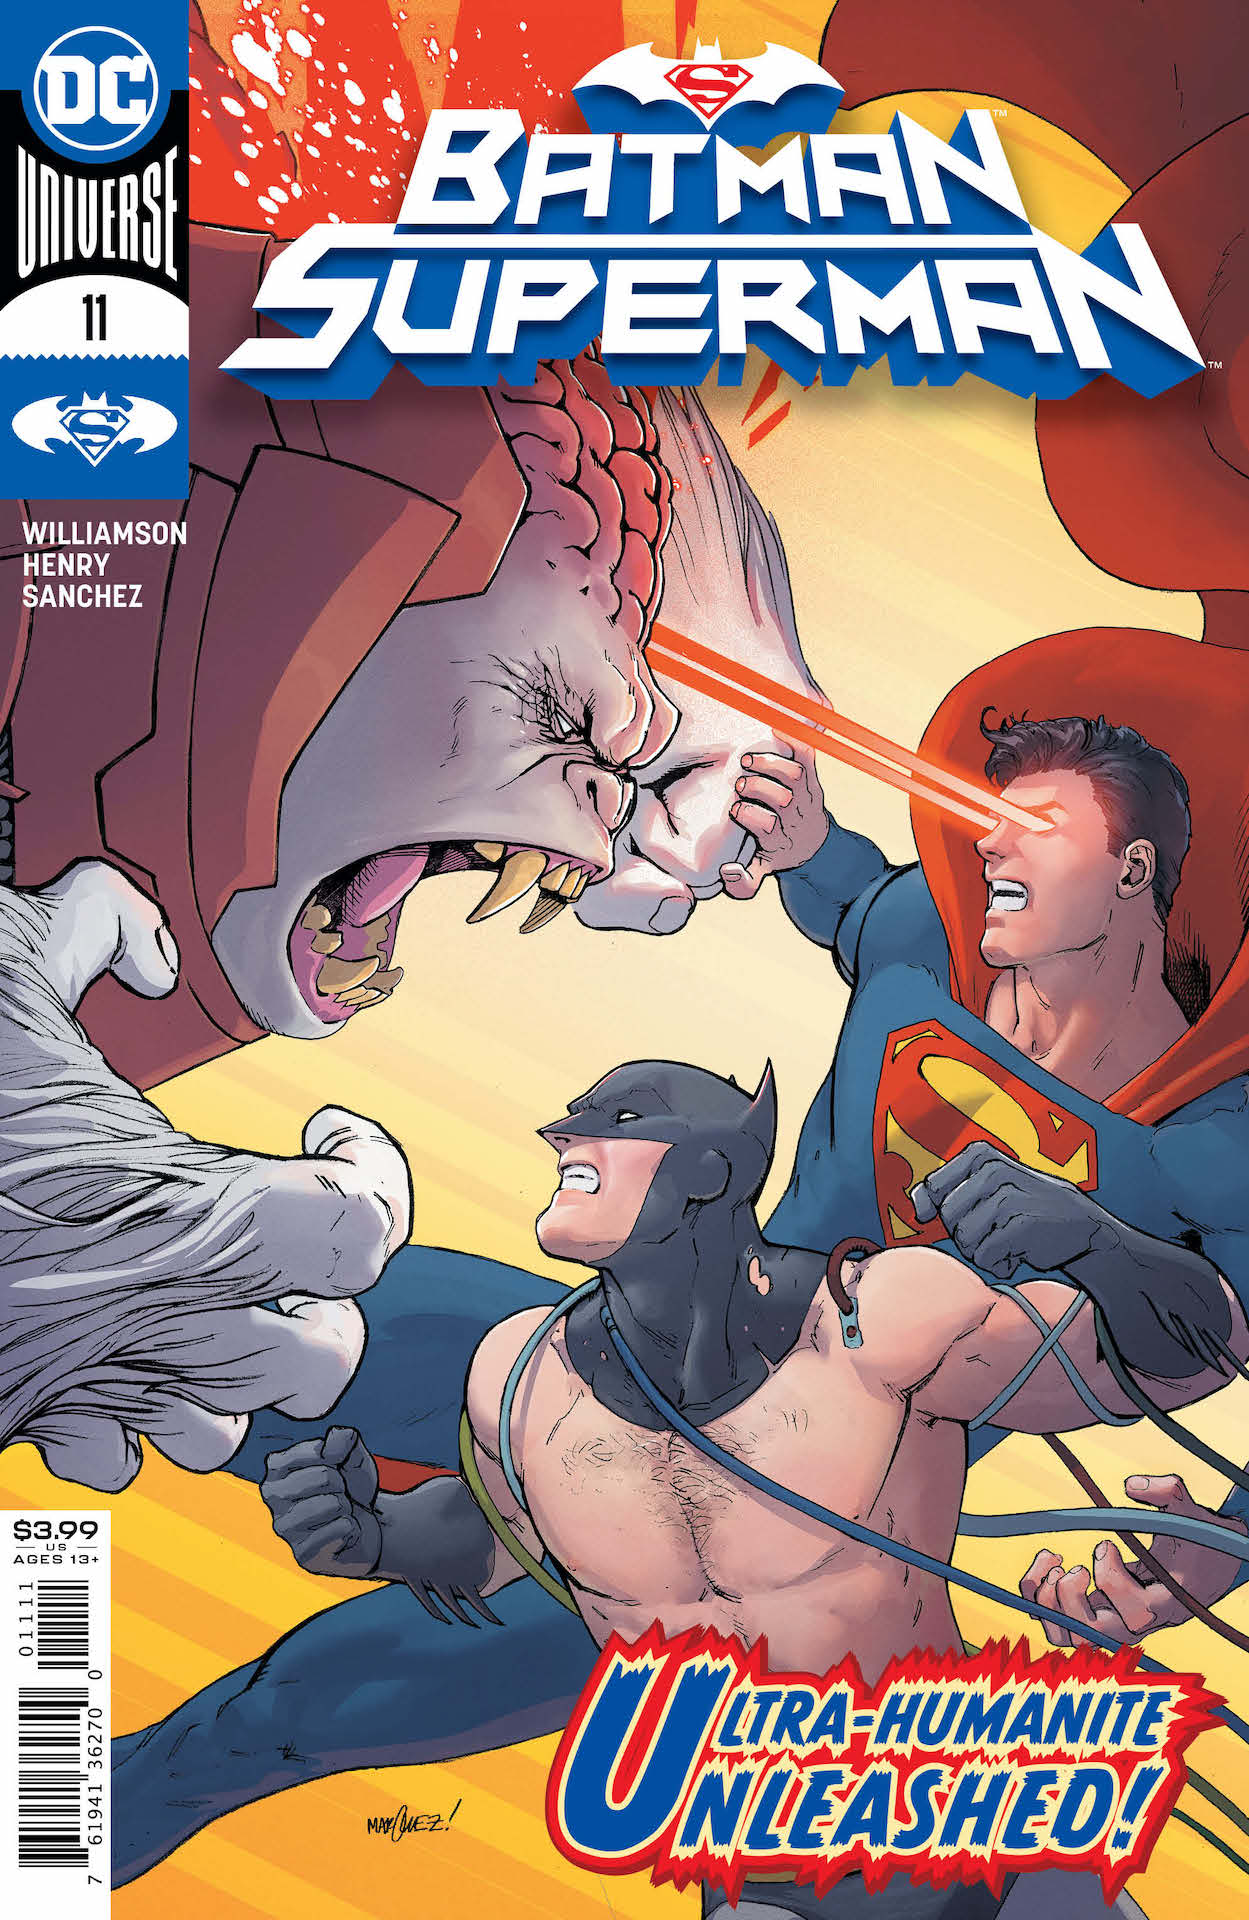 DC Preview: Batman/Superman #11